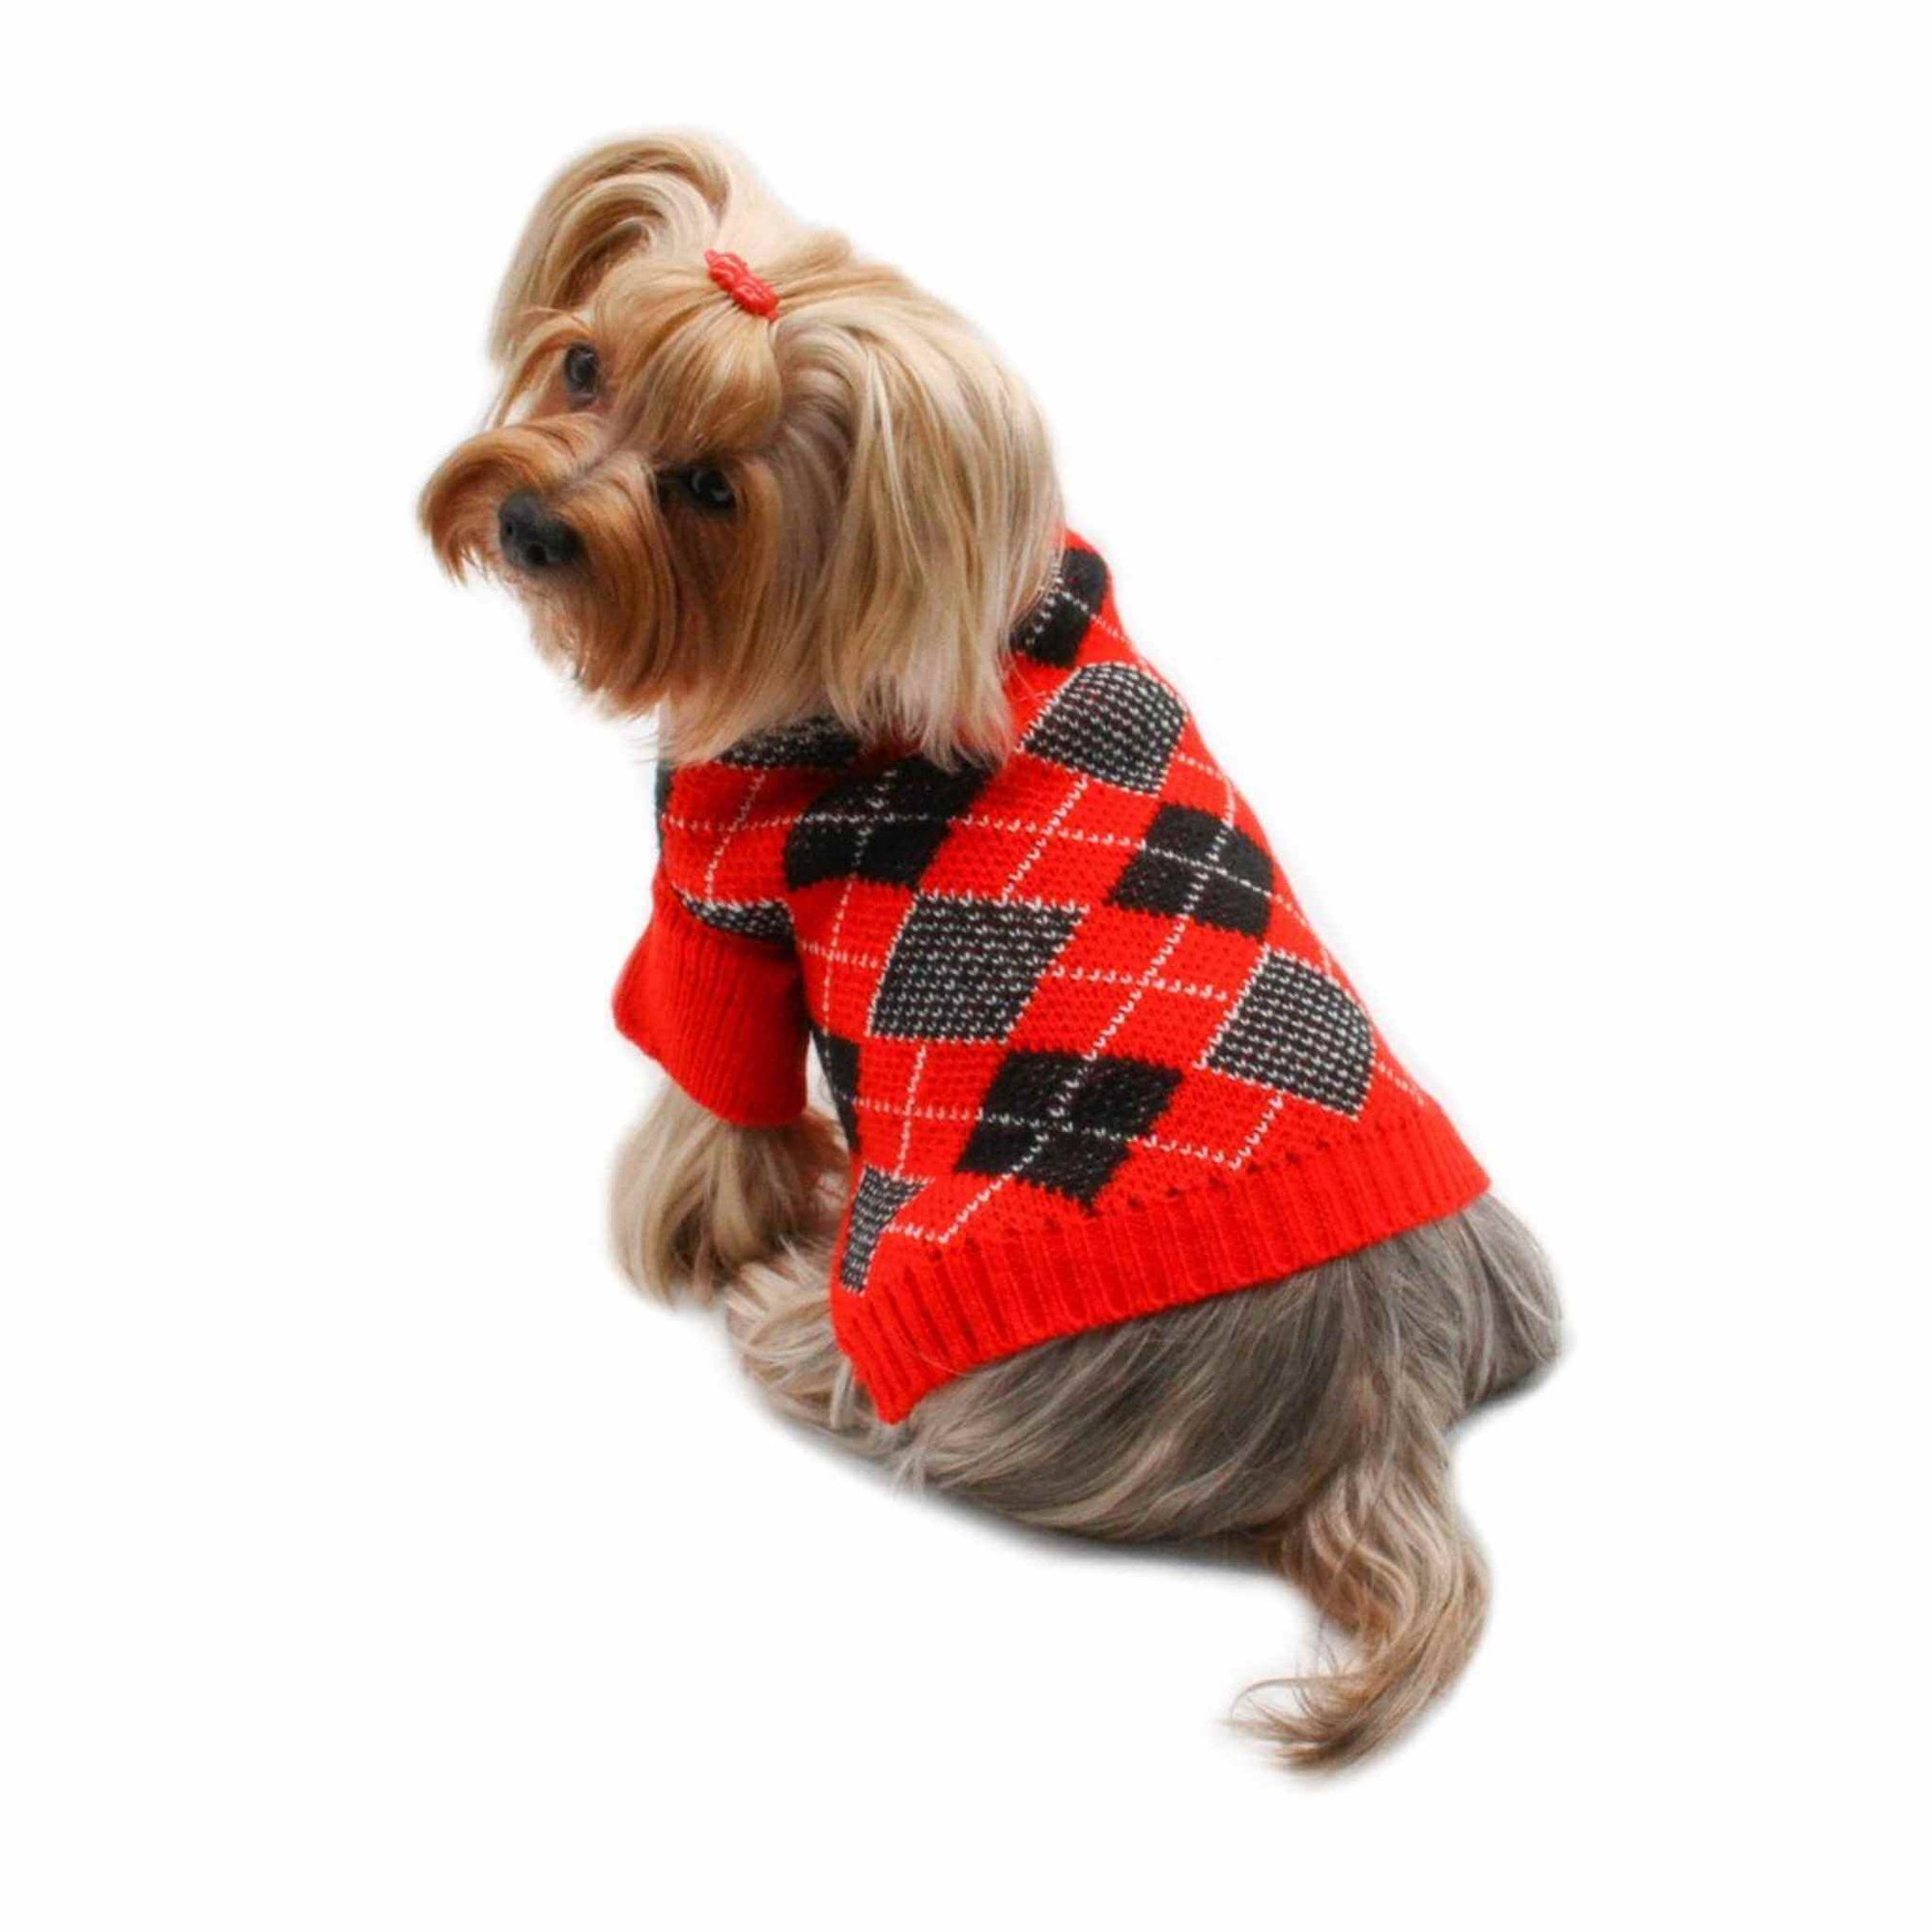 Klippo Red/Black Argyle Turtleneck Dog Sweater on a Yorkie